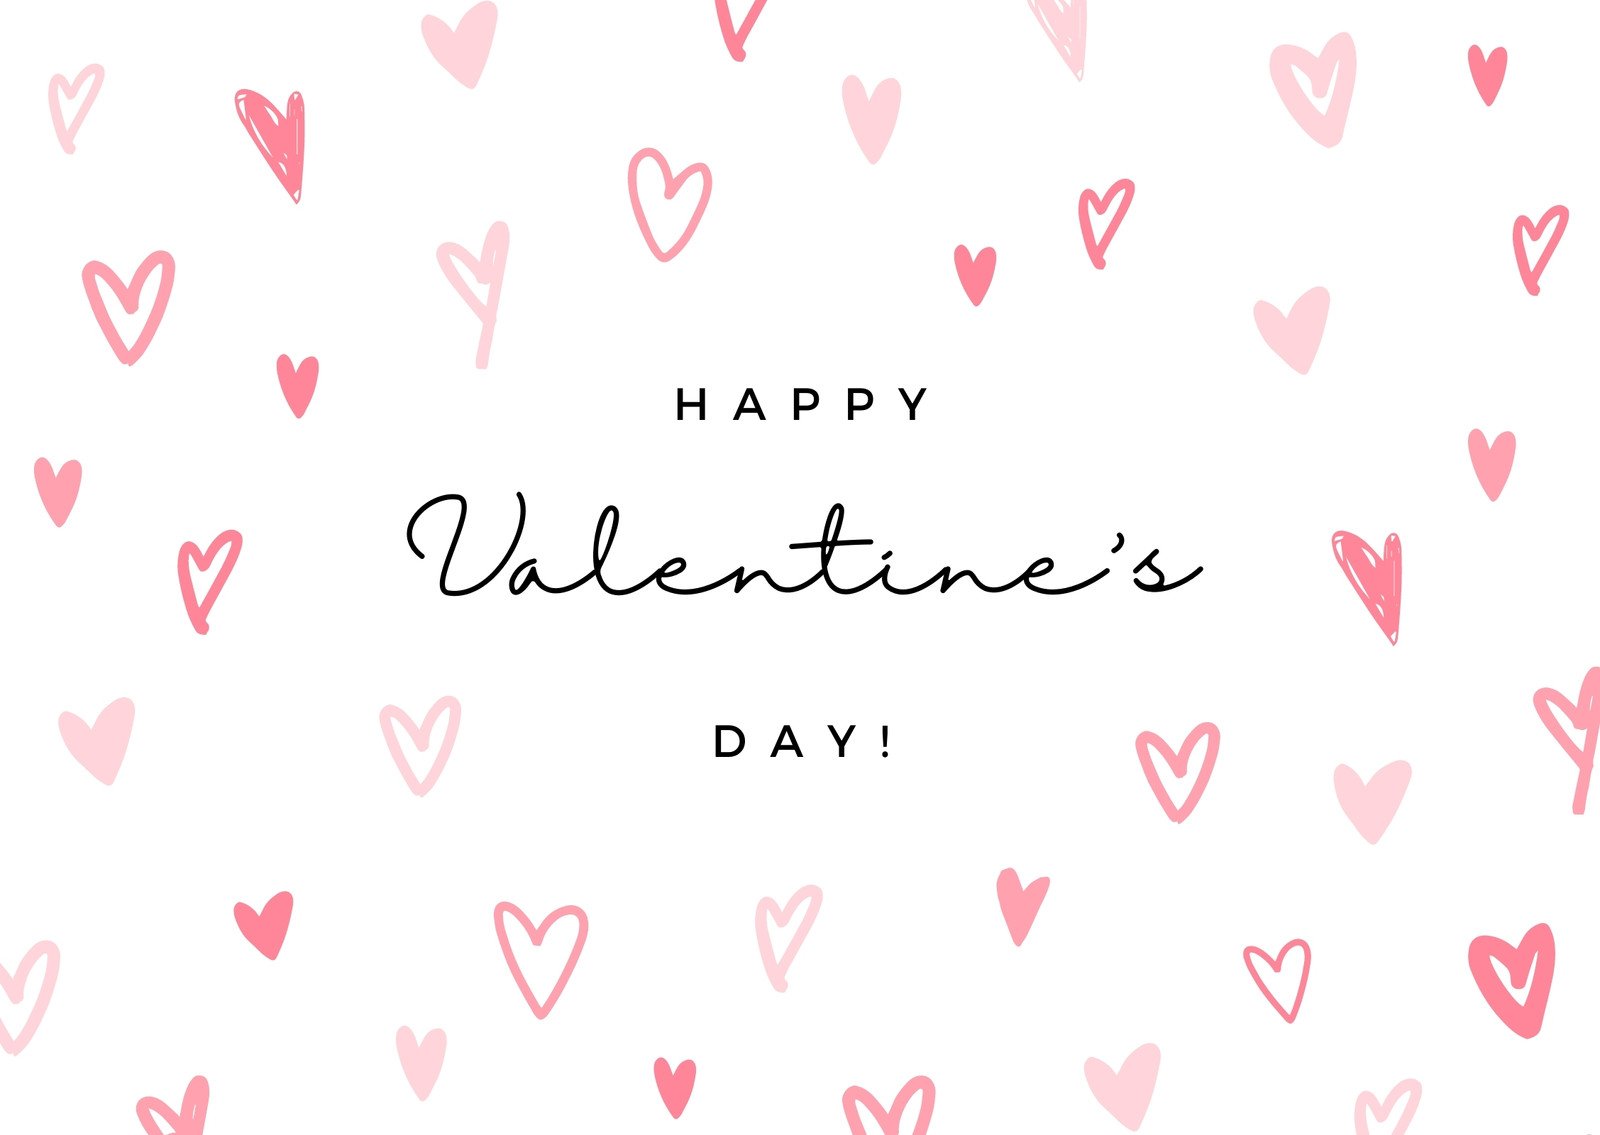 https://marketplace.canva.com/EAFWQsRDQ9I/1/0/1600w/canva-white-and-pink-modern-love-hearts-happy-valentine%E2%80%99s-day-card-Q6YbLlU-Lkc.jpg